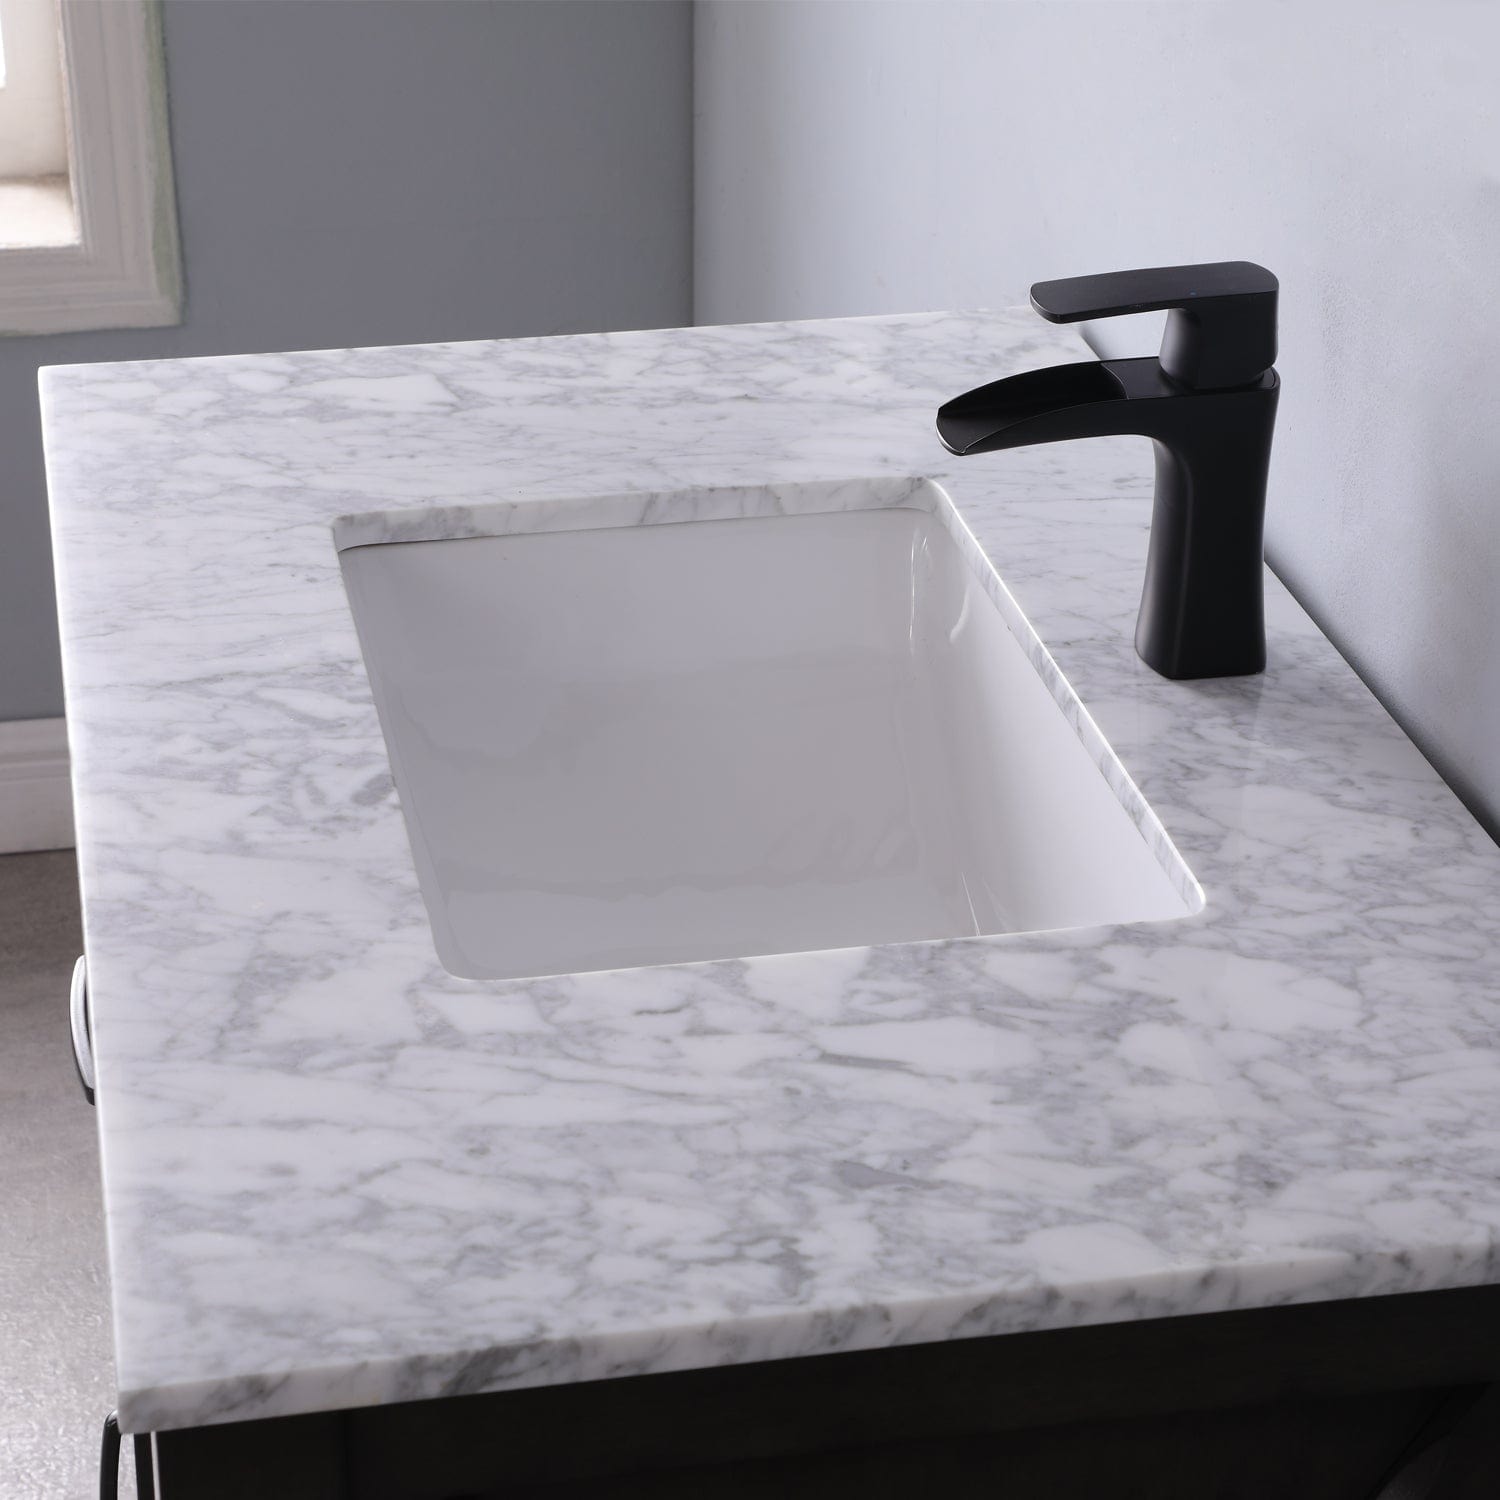 Altair Maribella 36" Single Bathroom Vanity Set in Rust Black and Carrara White Marble Countertop without Mirror 535036-RL-CA-NM - Molaix631112970280Vanity535036-RL-CA-NM